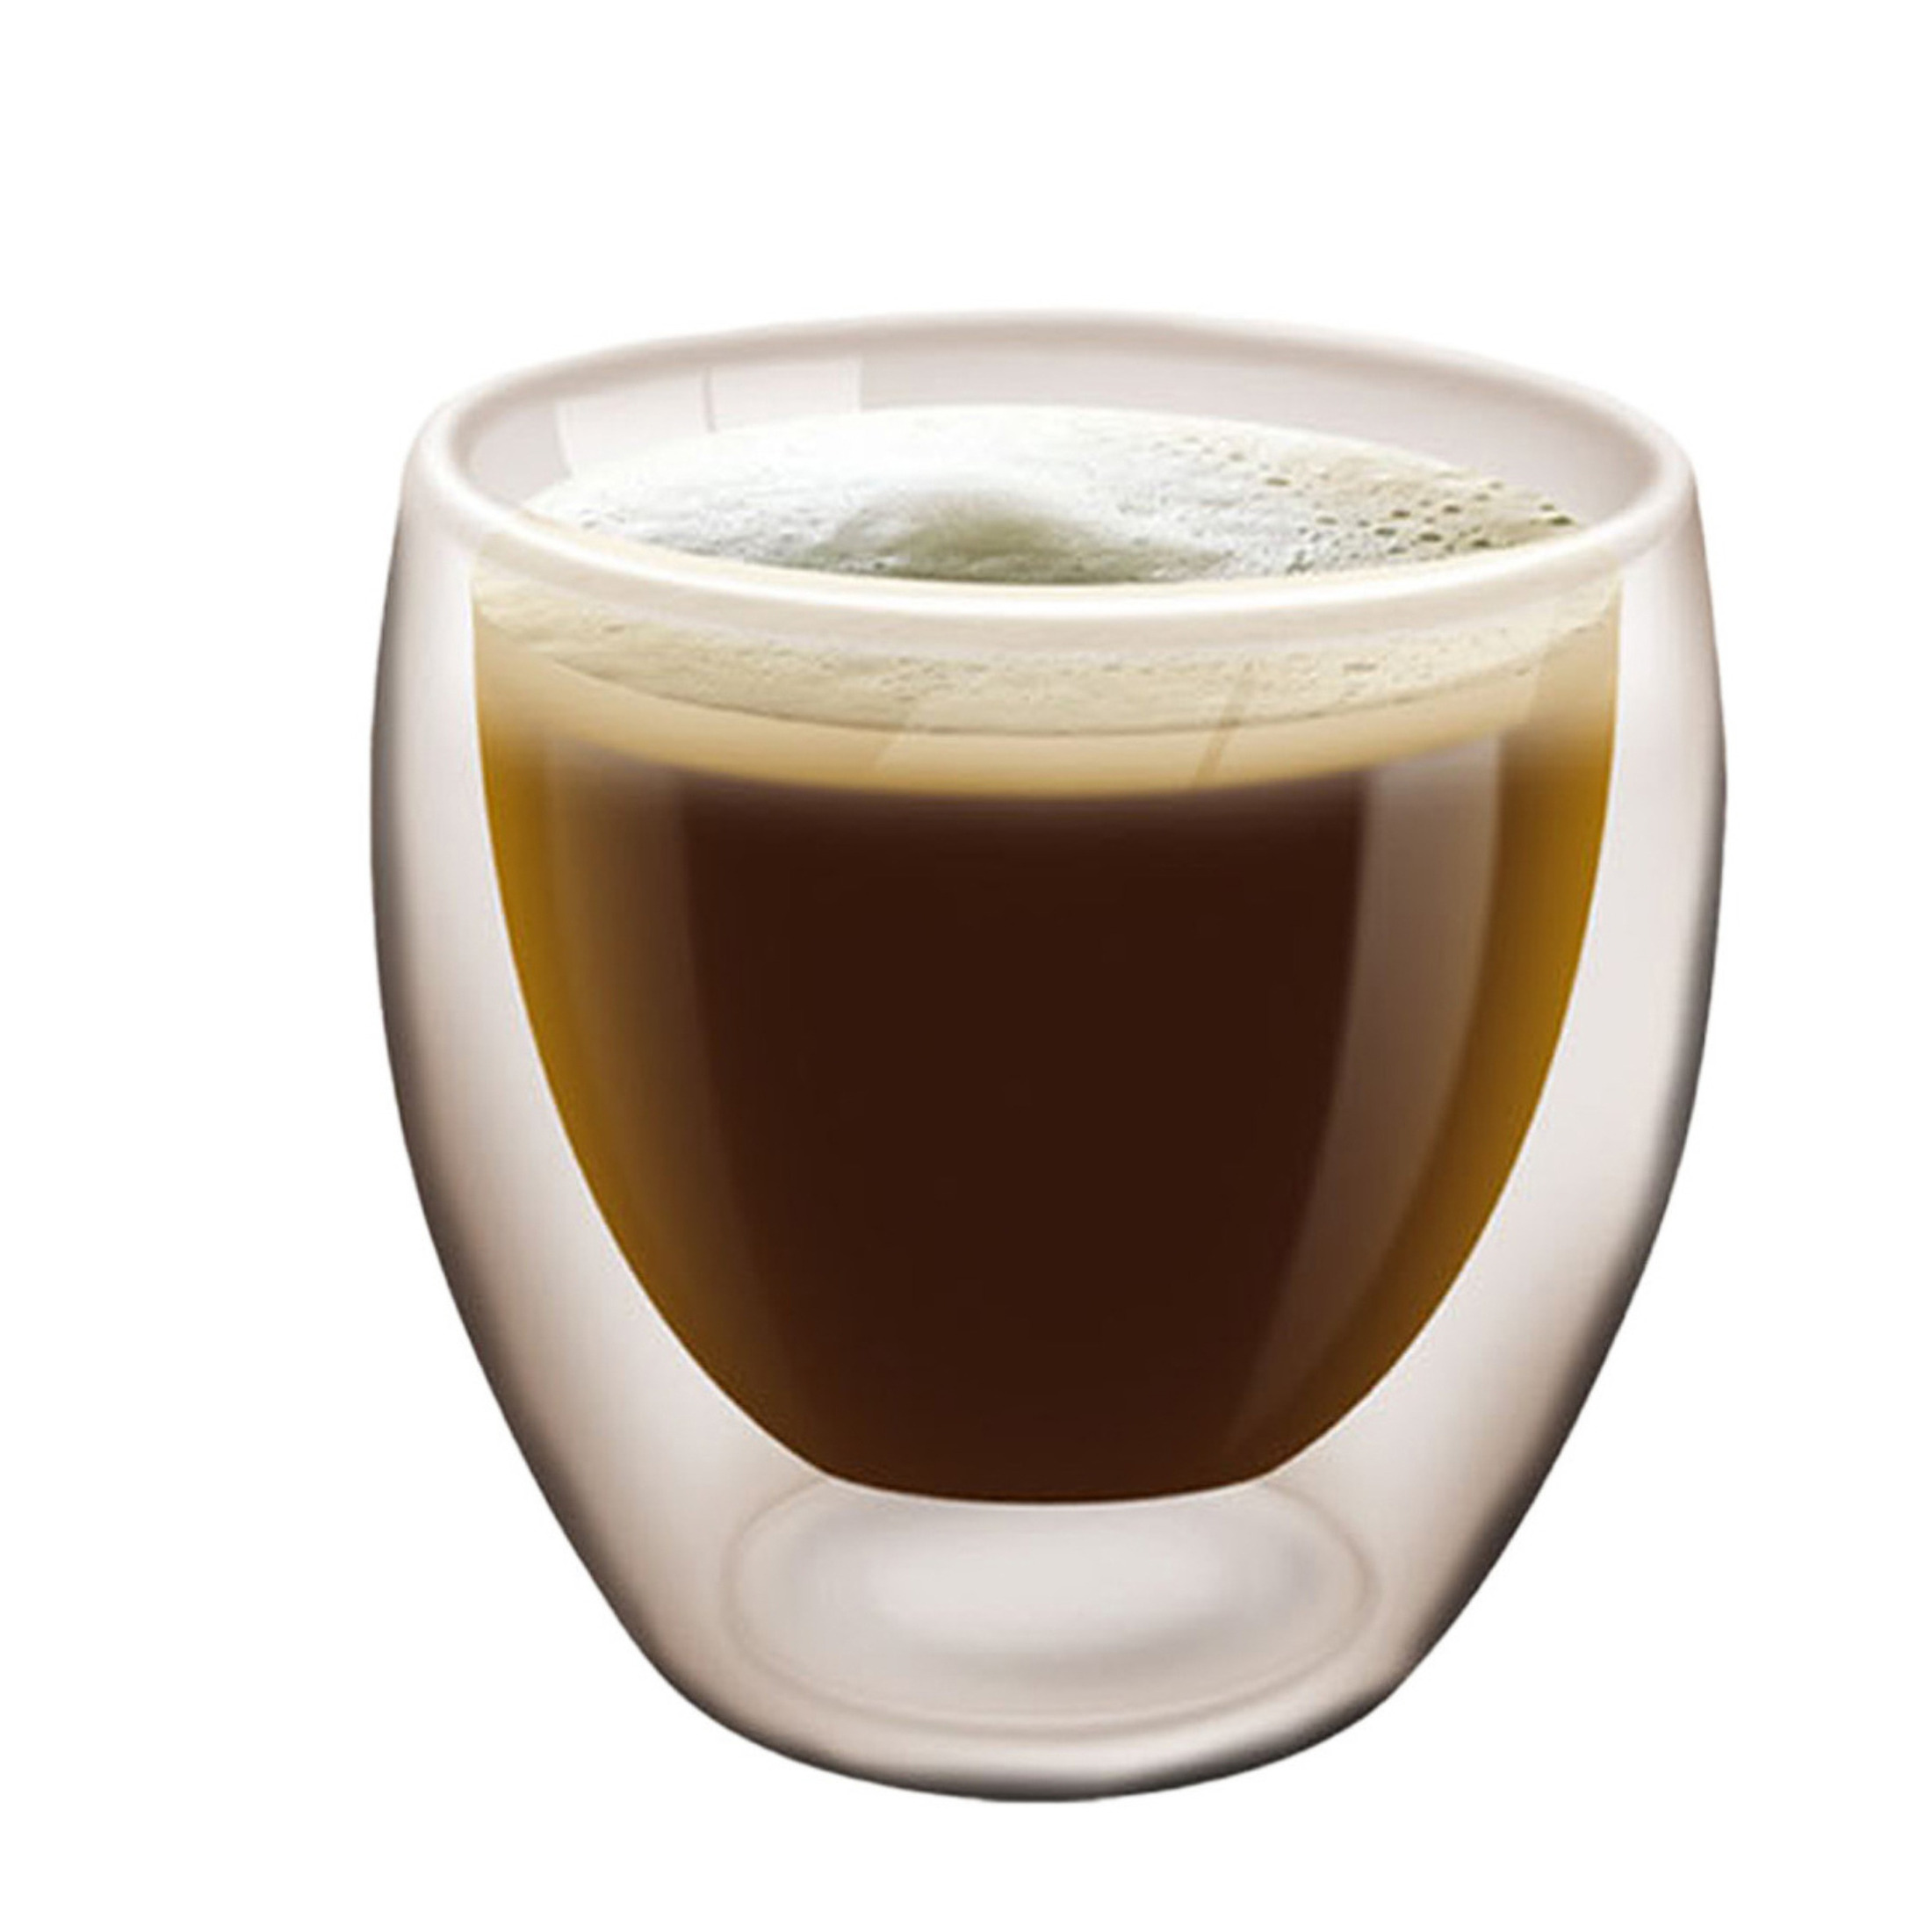 Koffieglas-theeglas dubbelwandig 1x lungo glas 200 ml